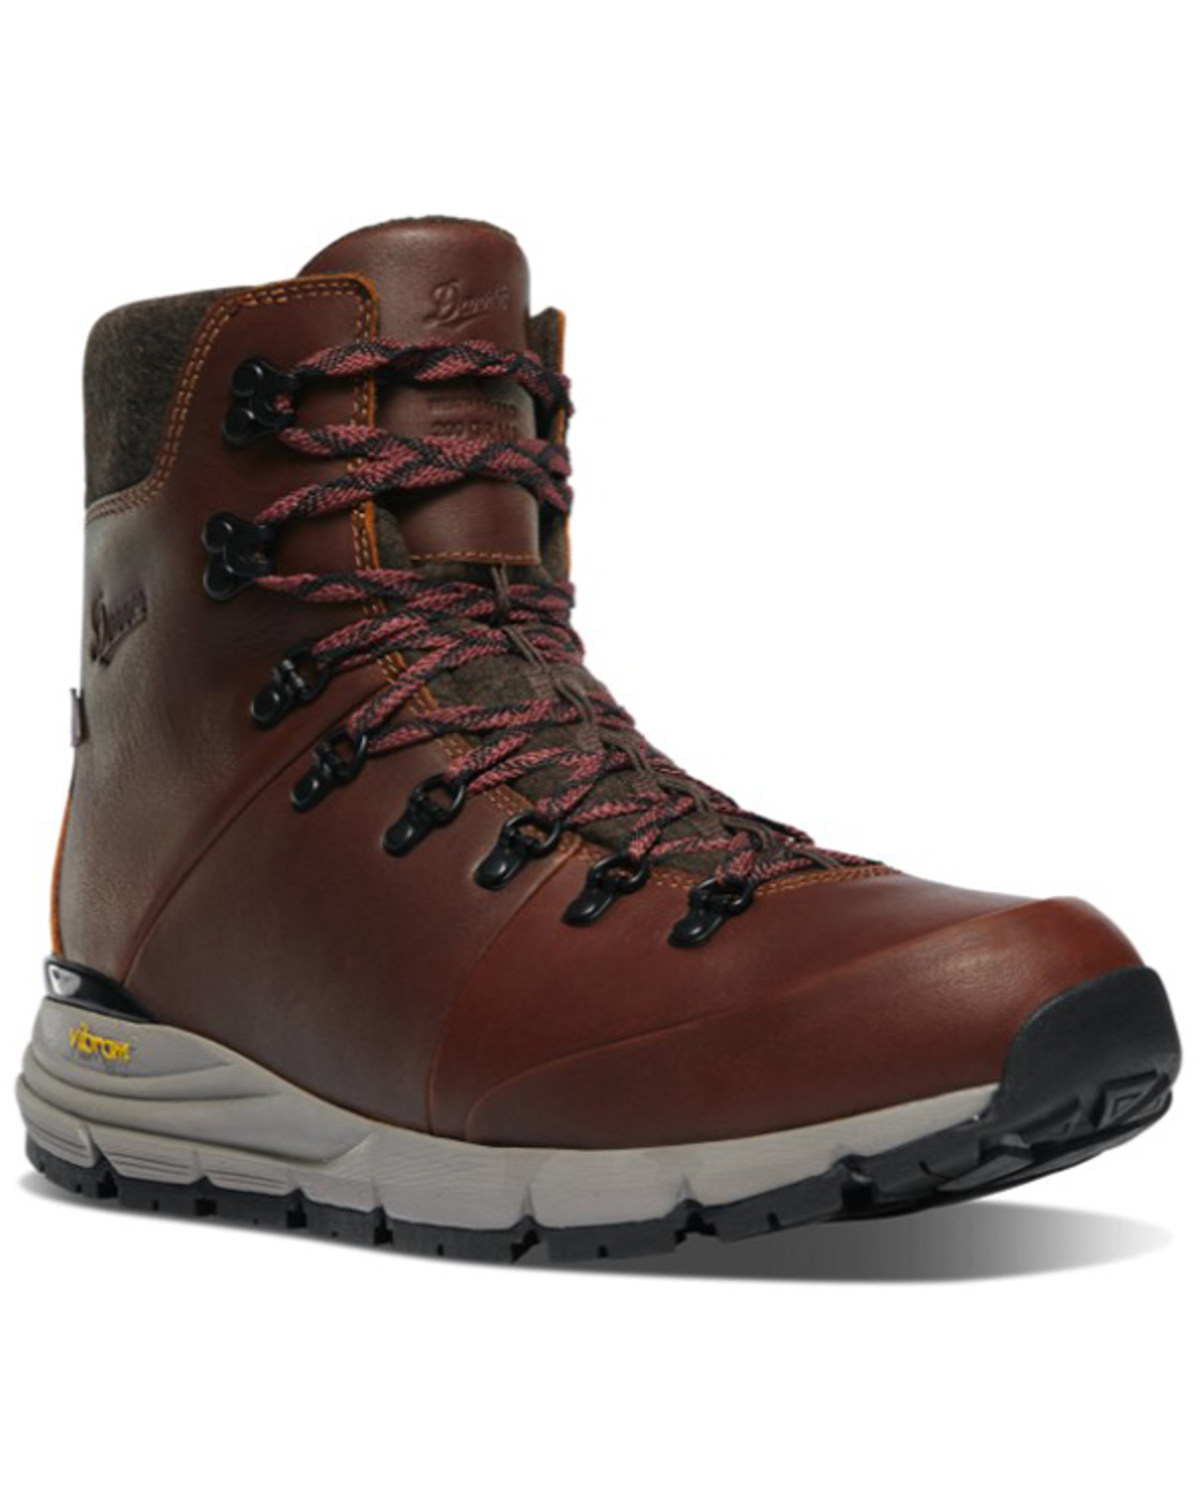 Danner Men's Arctic 600 Insulated Hiker Work Boots - Round Toe